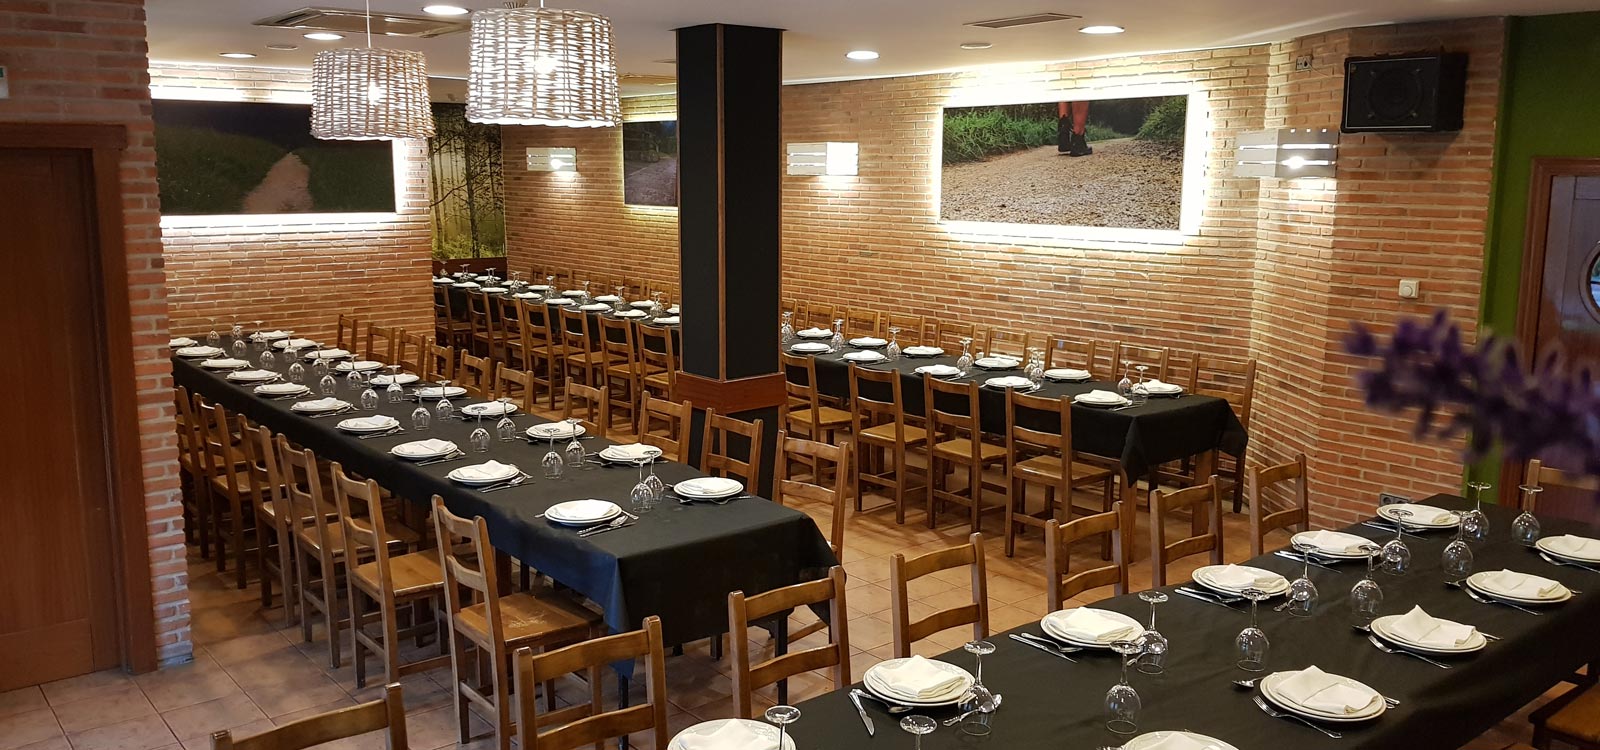 Ibaigane restaurant dinning room